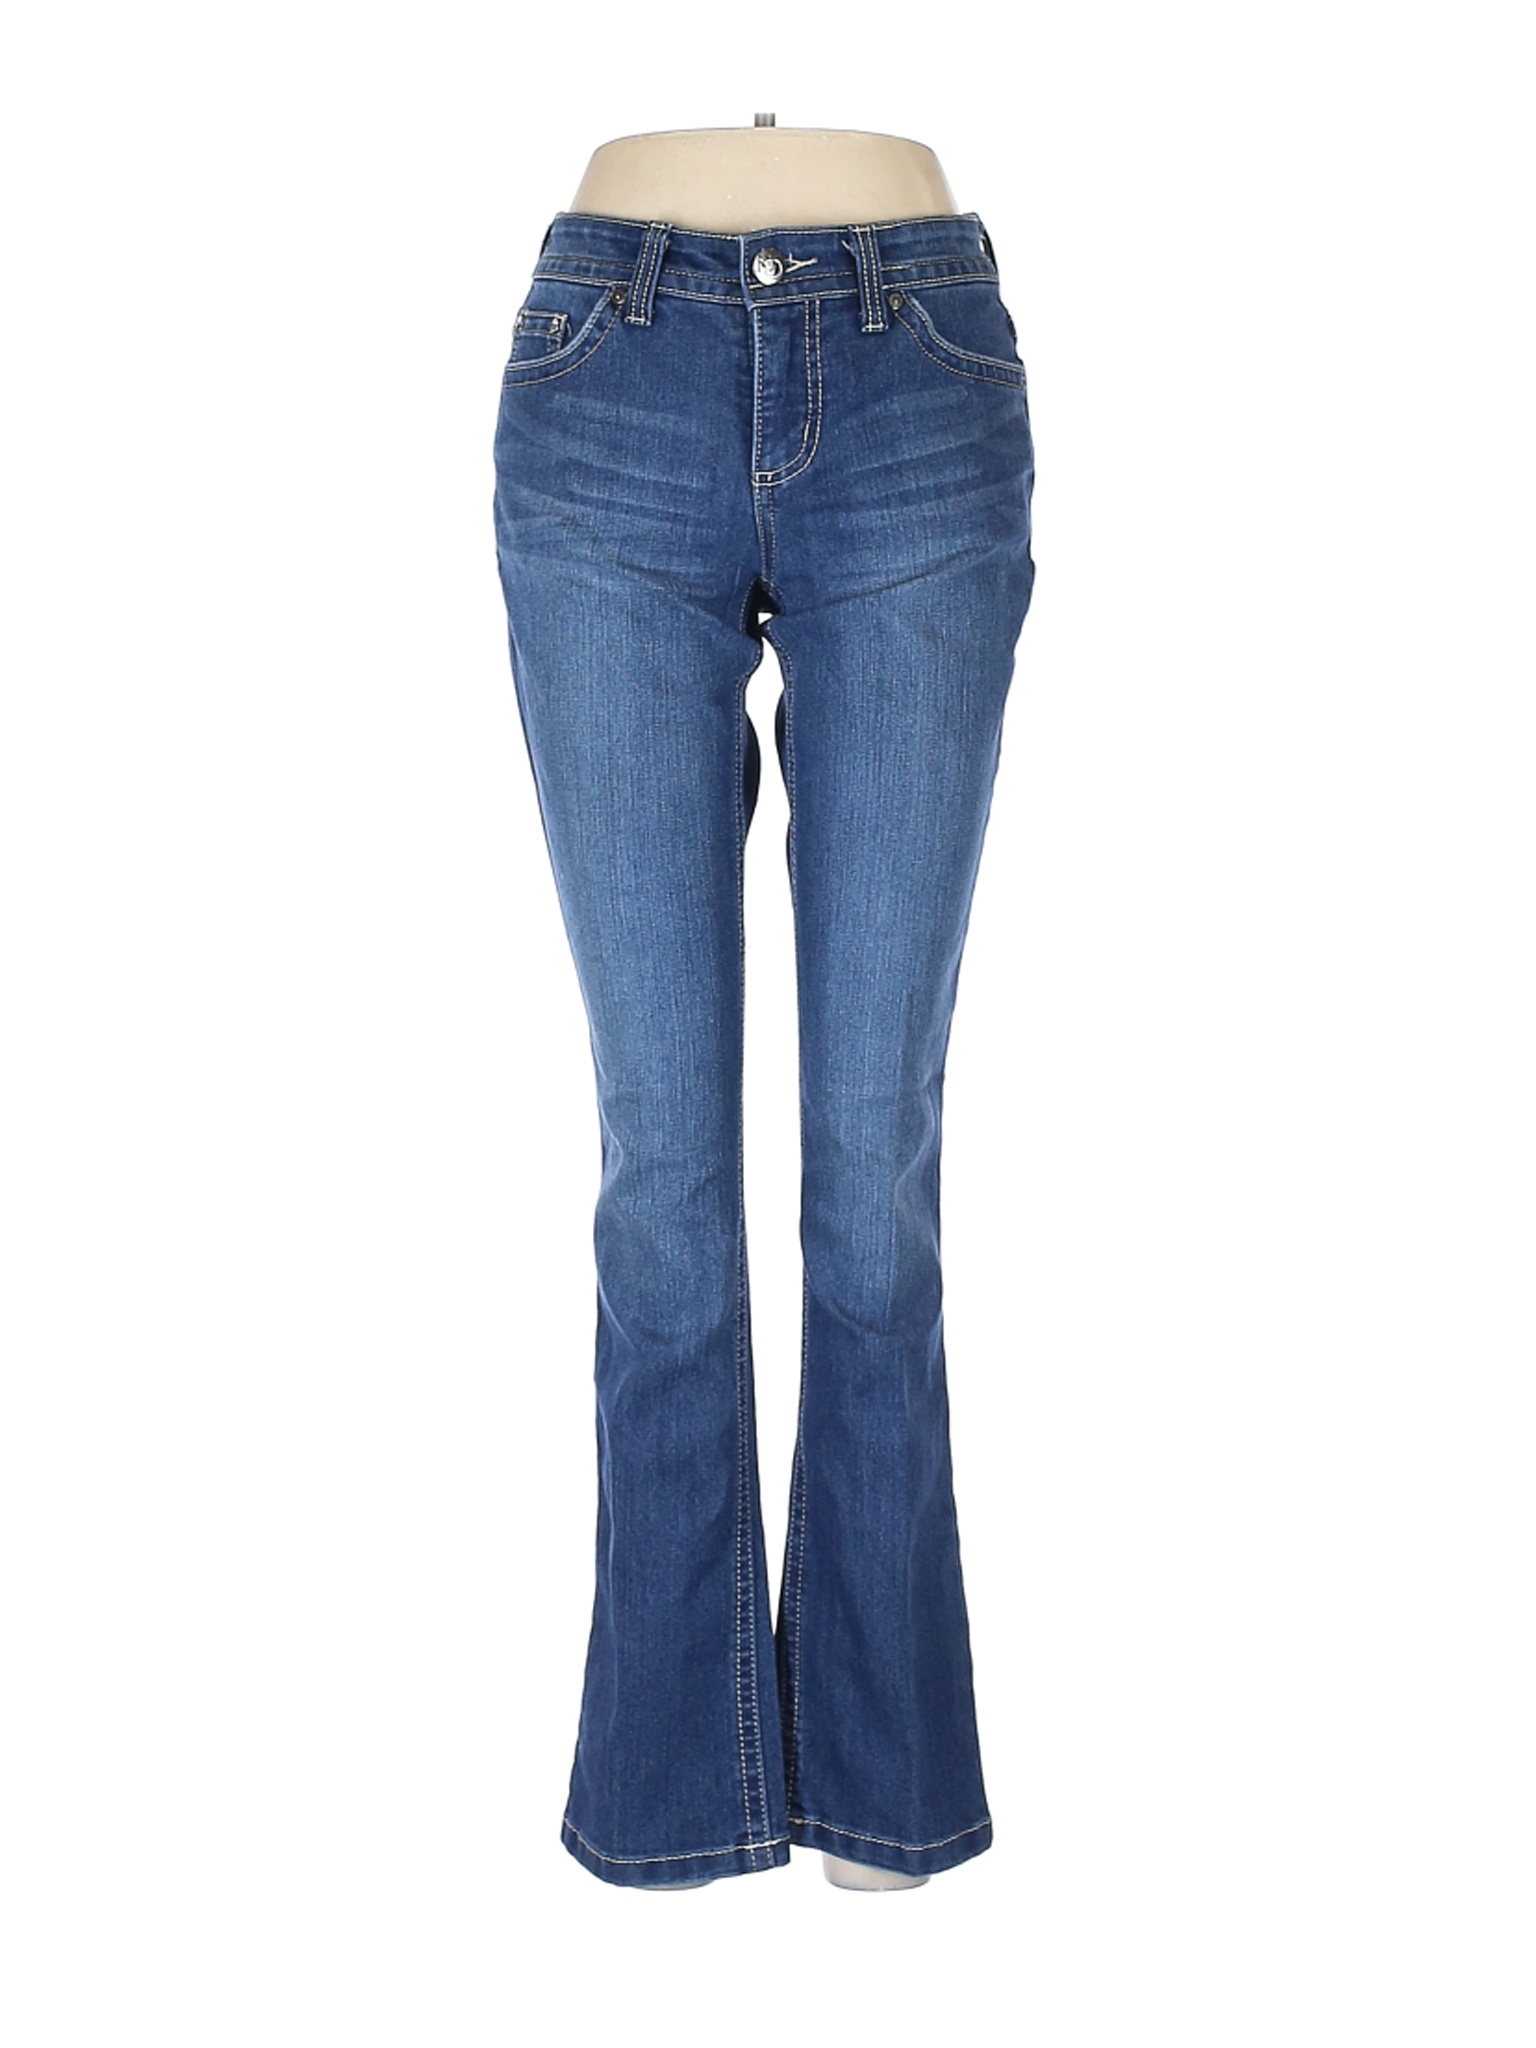 New Directions Women Blue Jeans 2 Petites | eBay